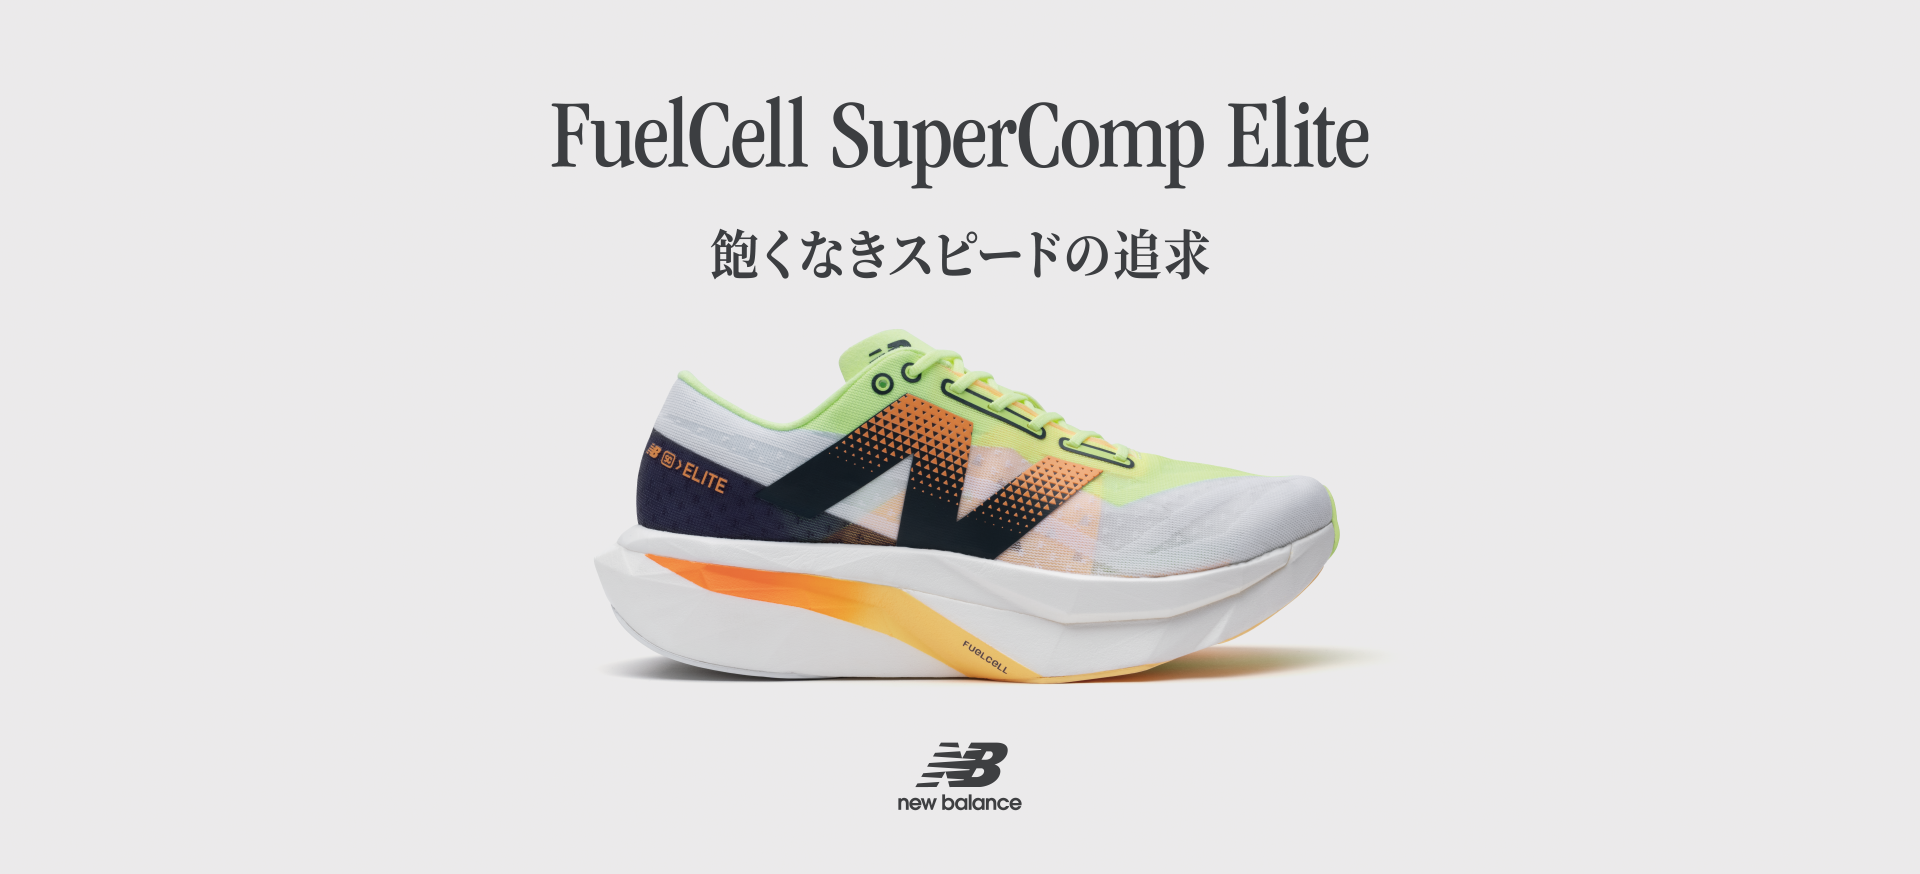 FuelCell SuperComp Elite 飽くなきスピードの追求